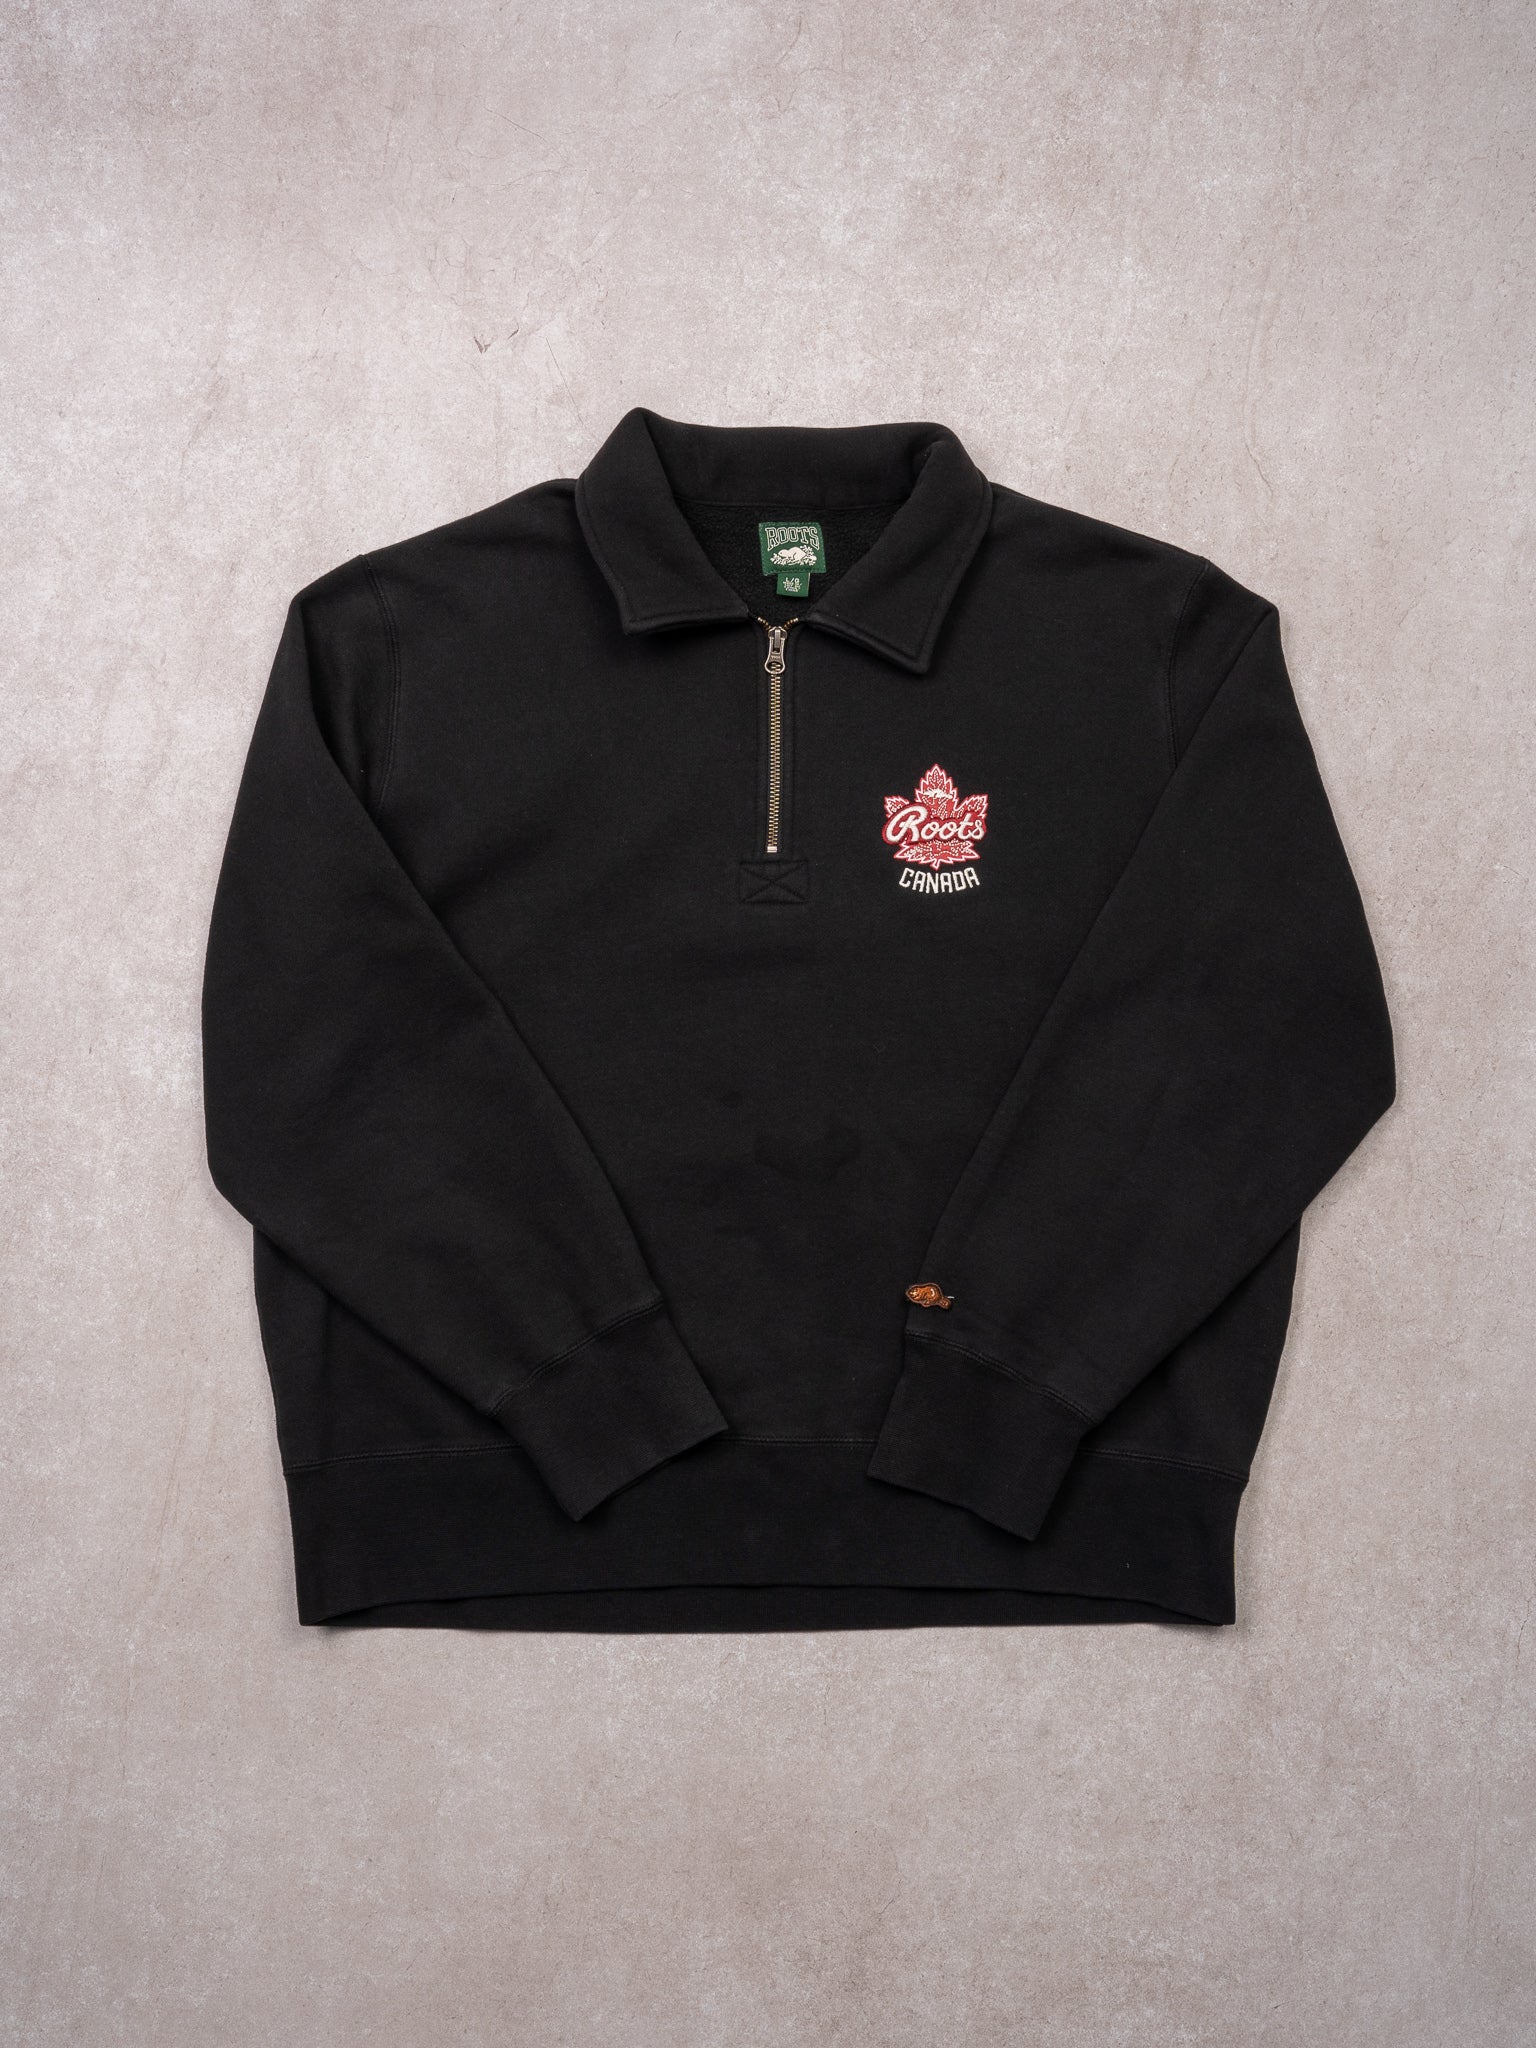 Vintage Black Roots Canada 1/4 Zip Sweater (L)